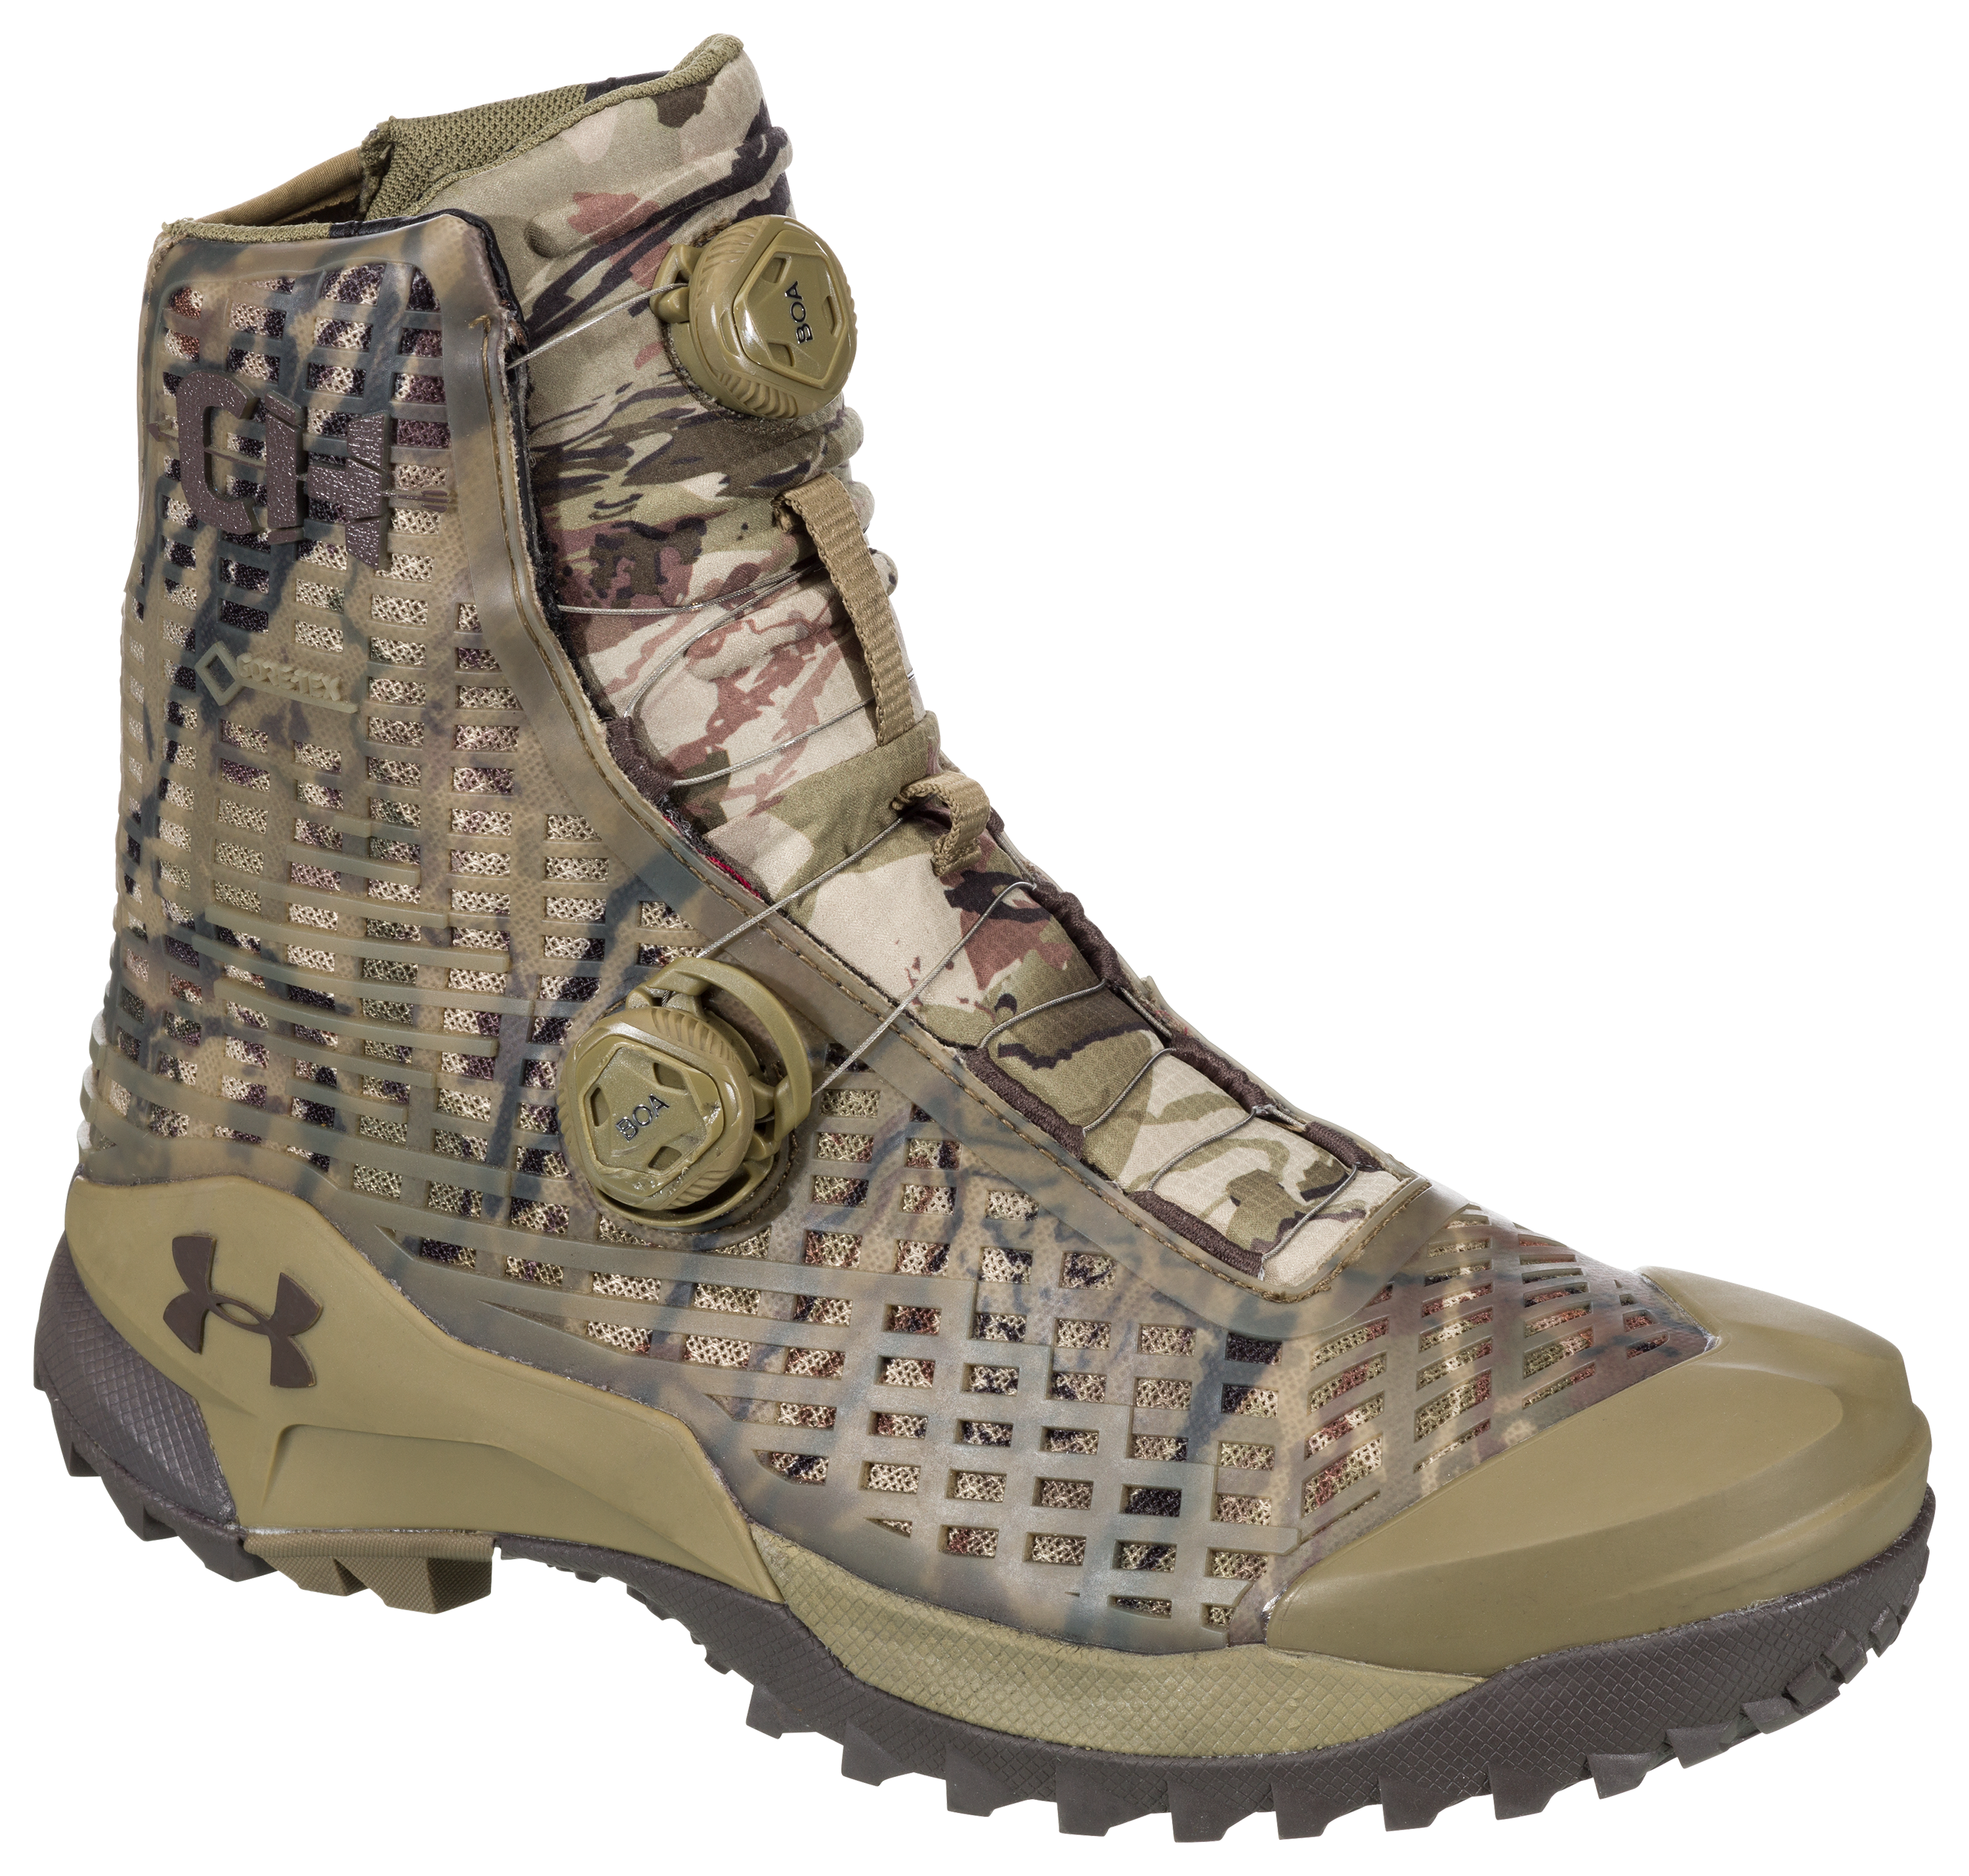 Under Armour CH1 GTX GORE-TEX Tactical Boots  for Men - Bayou Ridge Reaper Camo Barren - 11 5M